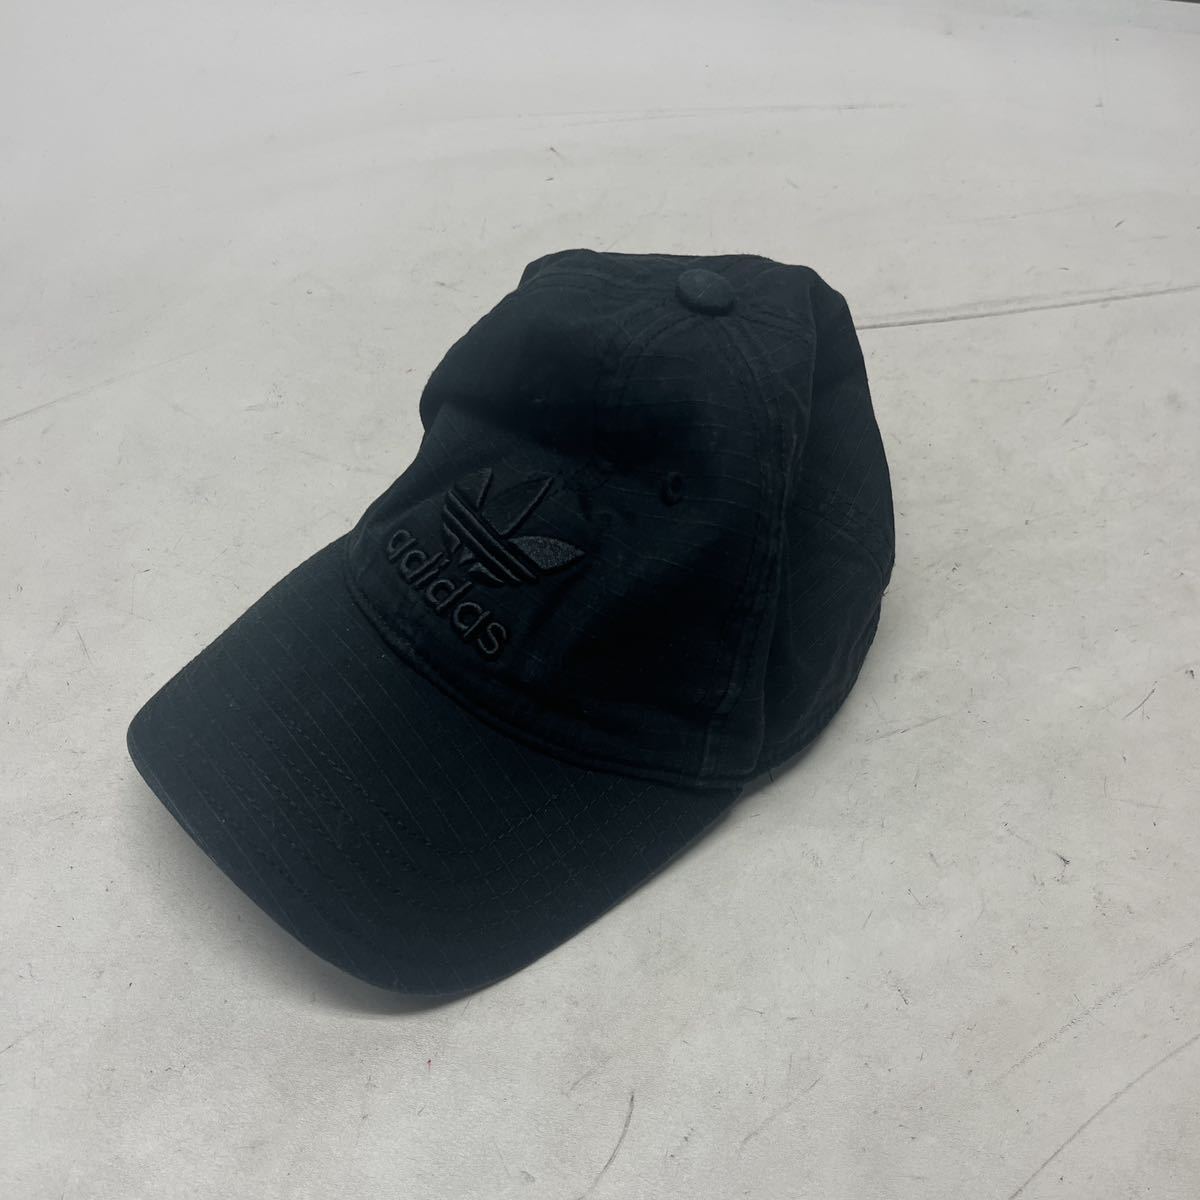  free shipping *adidas Adidas cap hat black size free #51216miamt